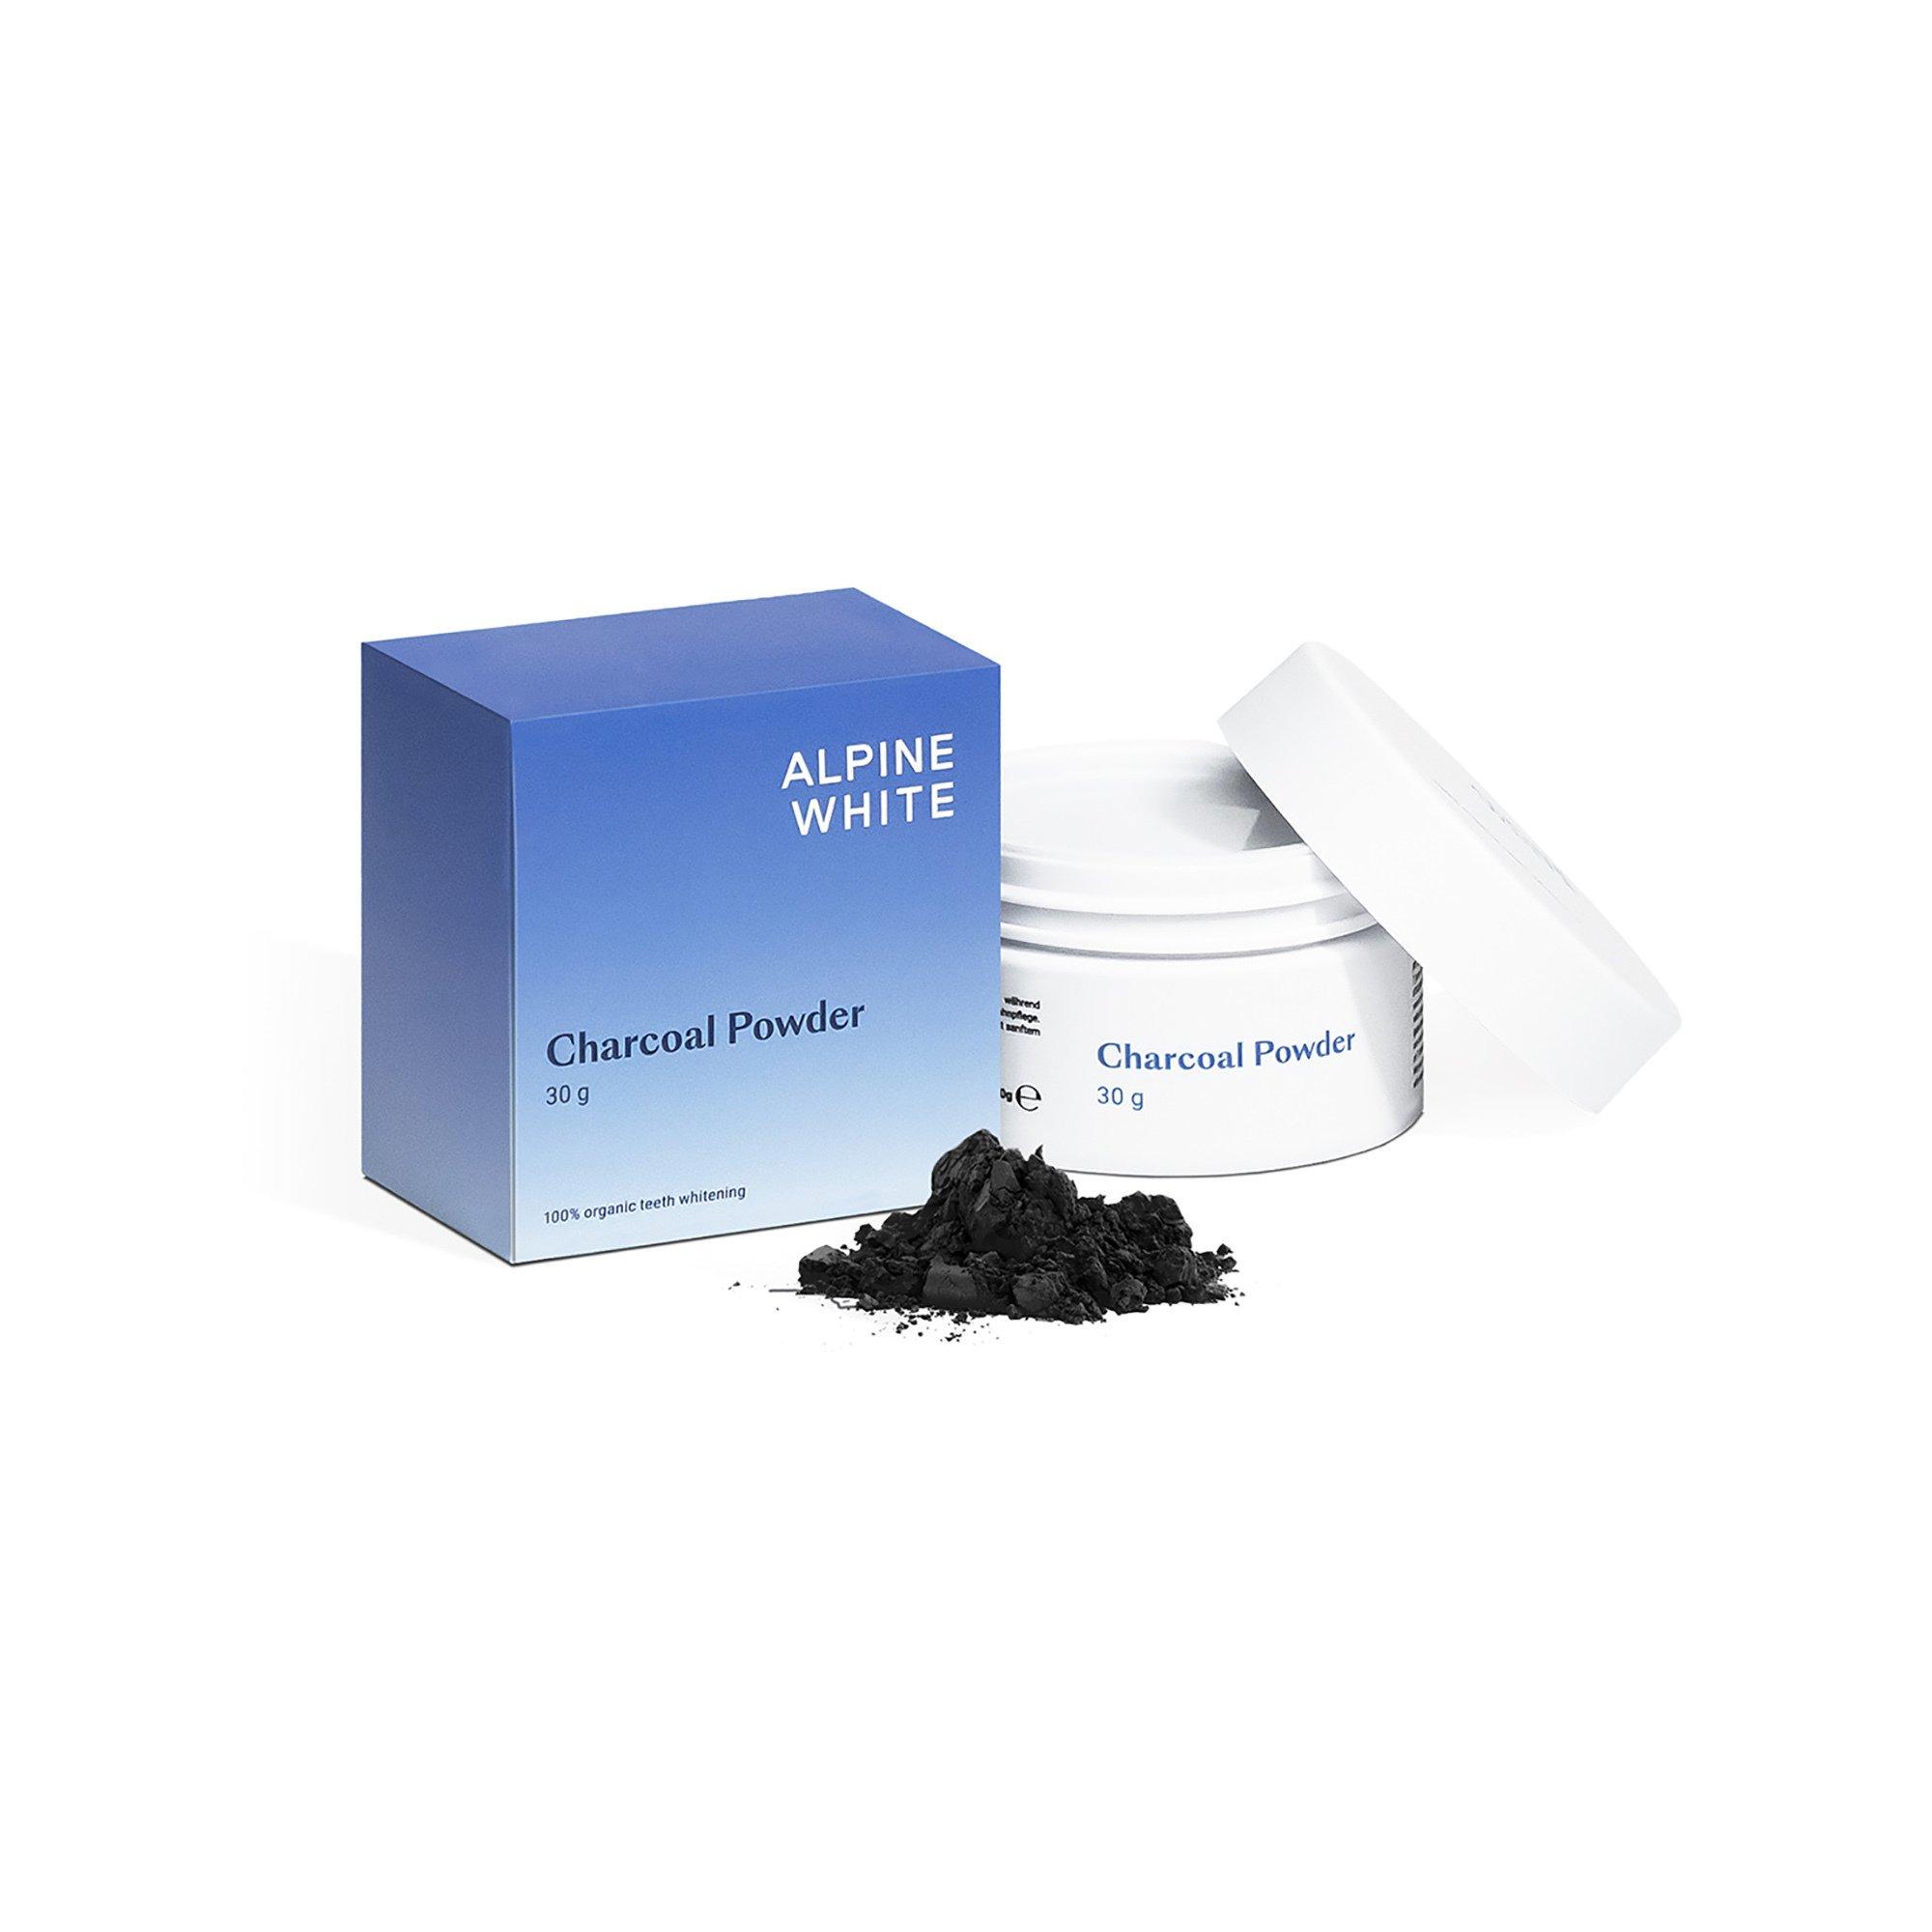 Image of ALPINE WHITE Charcoal Powder Charcoal Powder - 30g